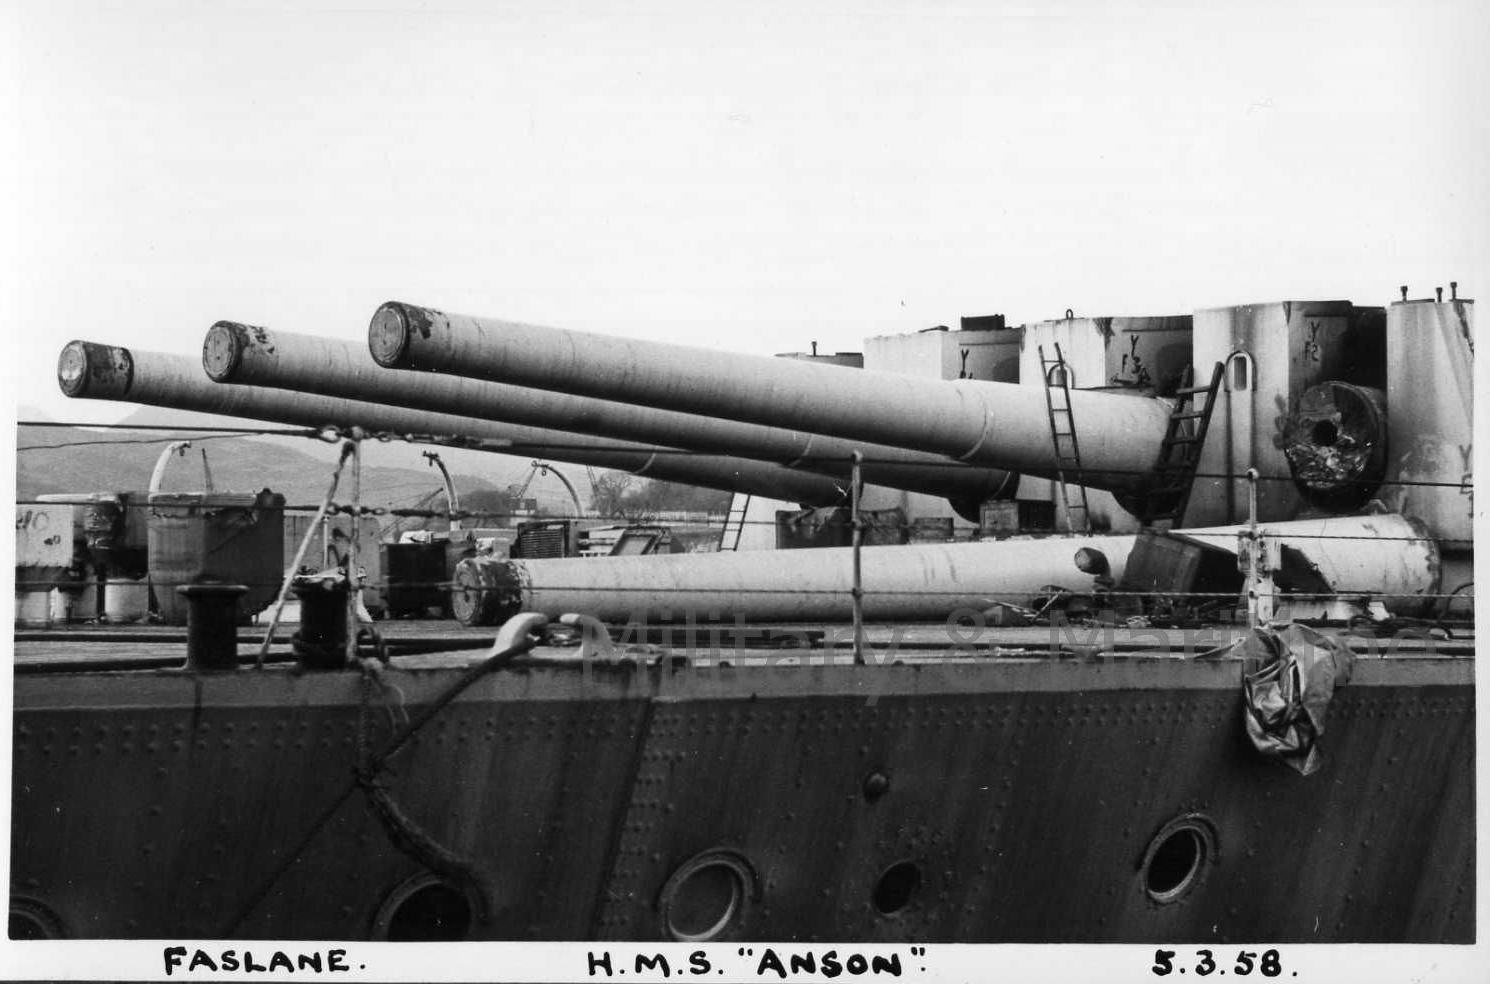 HMS Anson - Breaking up at Faslane in Scotland - 1958.jpg